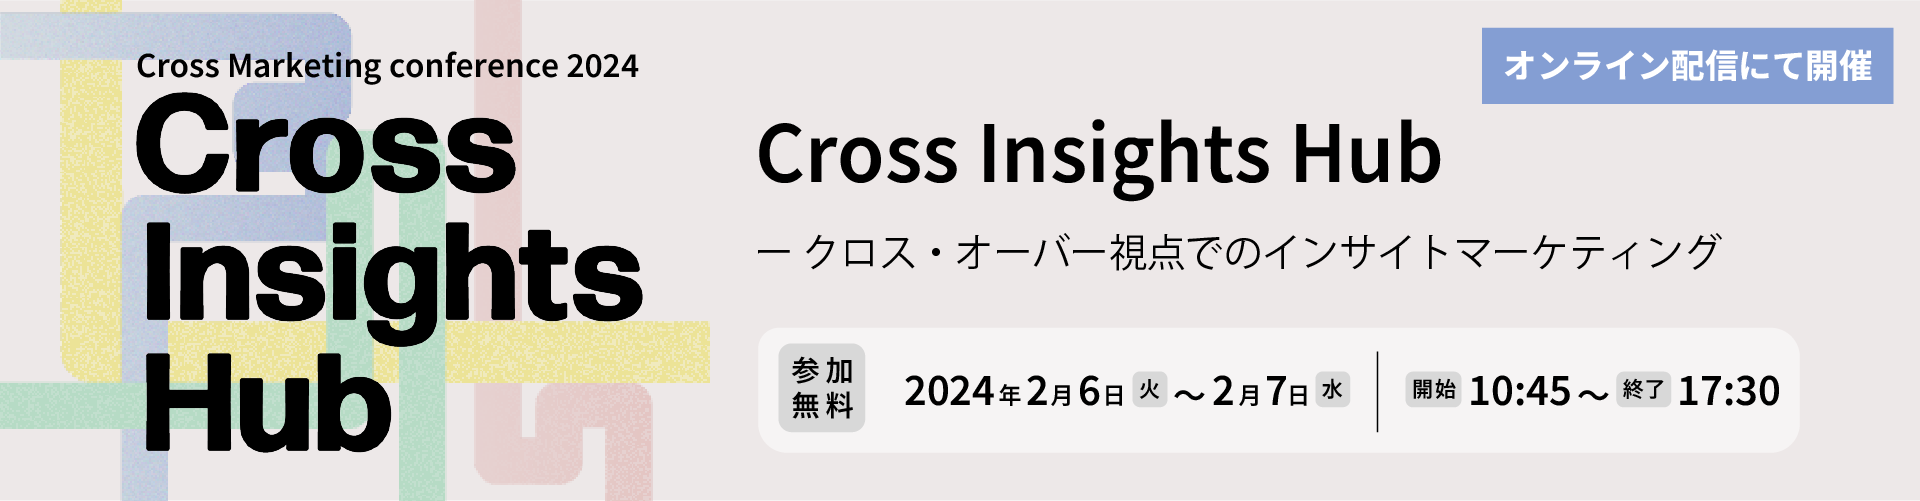 Cross Insights Hub